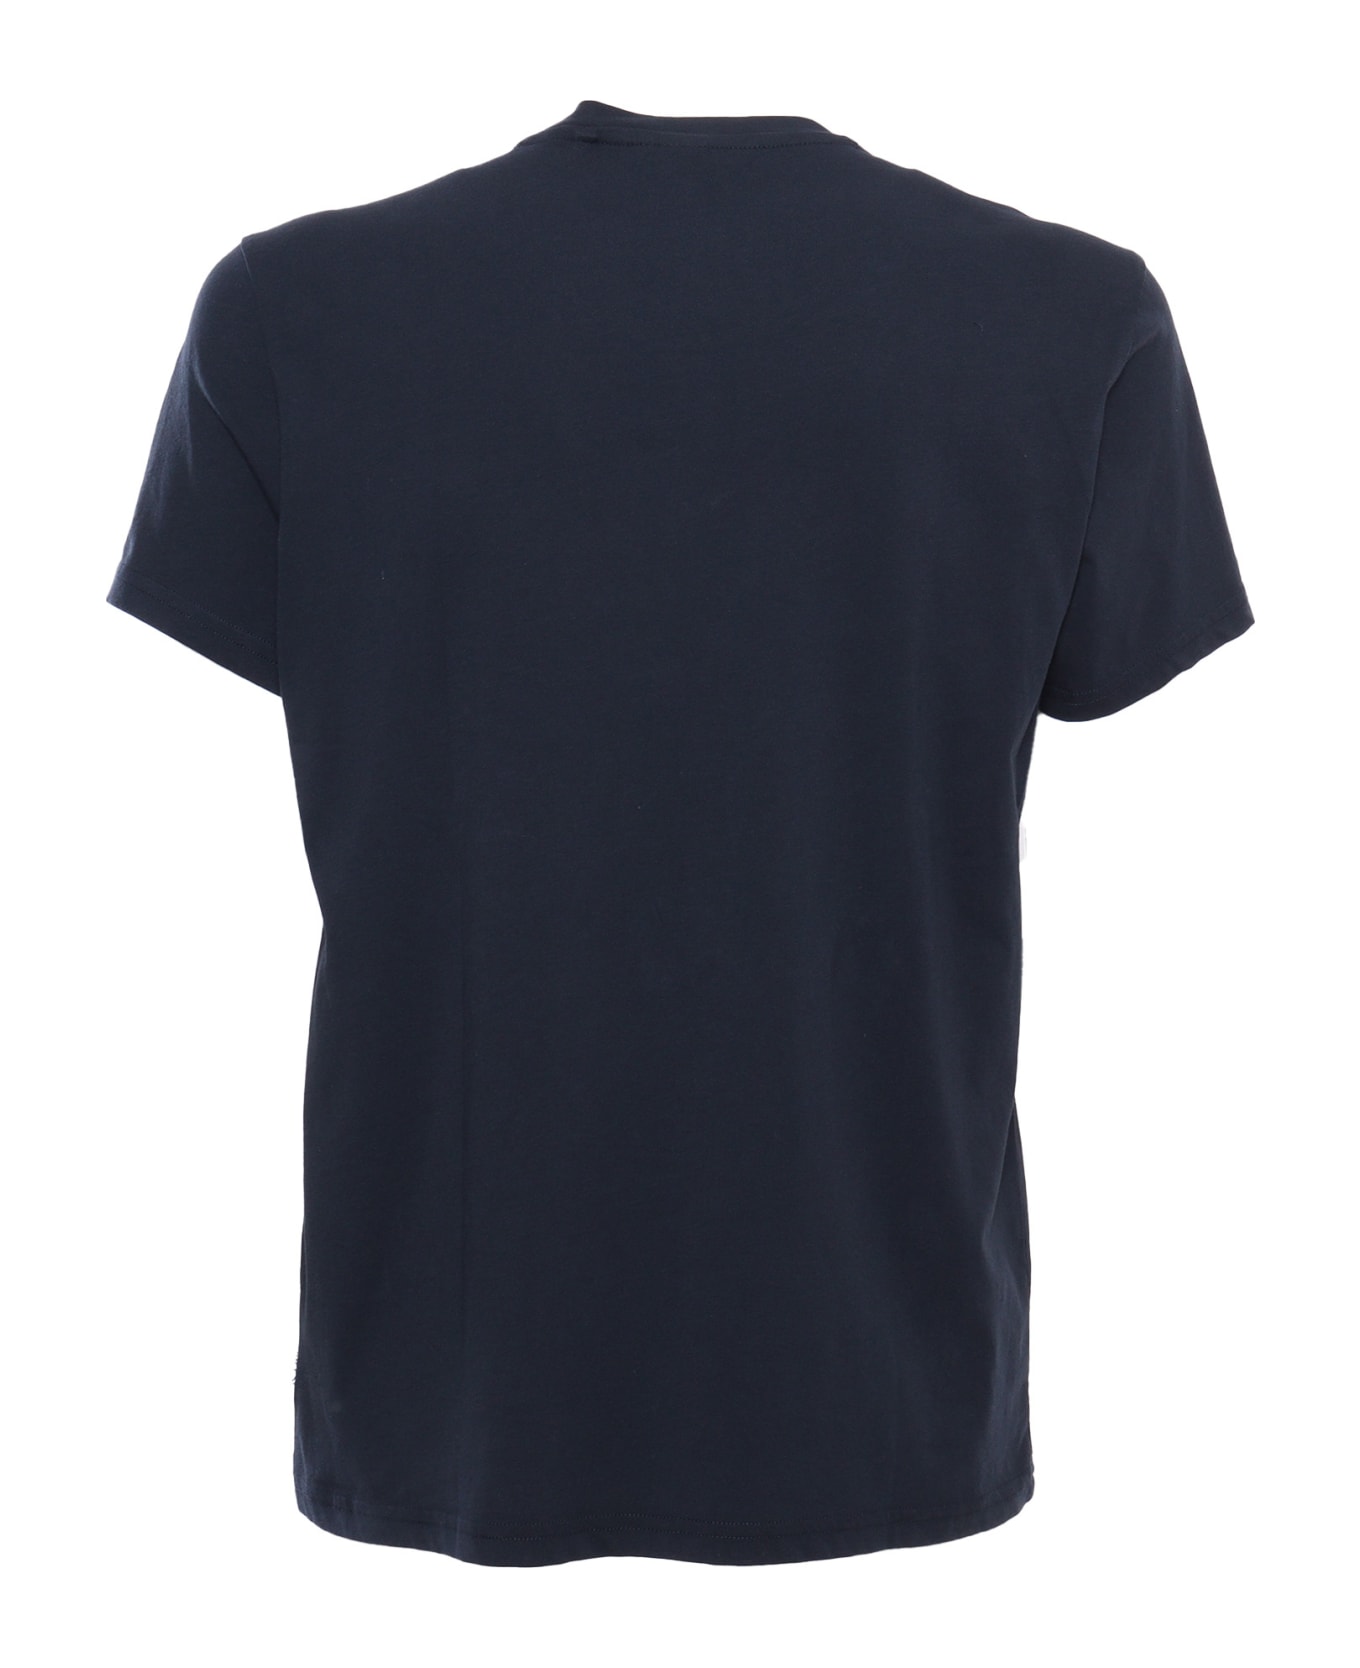 Aspesi Black T-shirt With Prints - BLUE